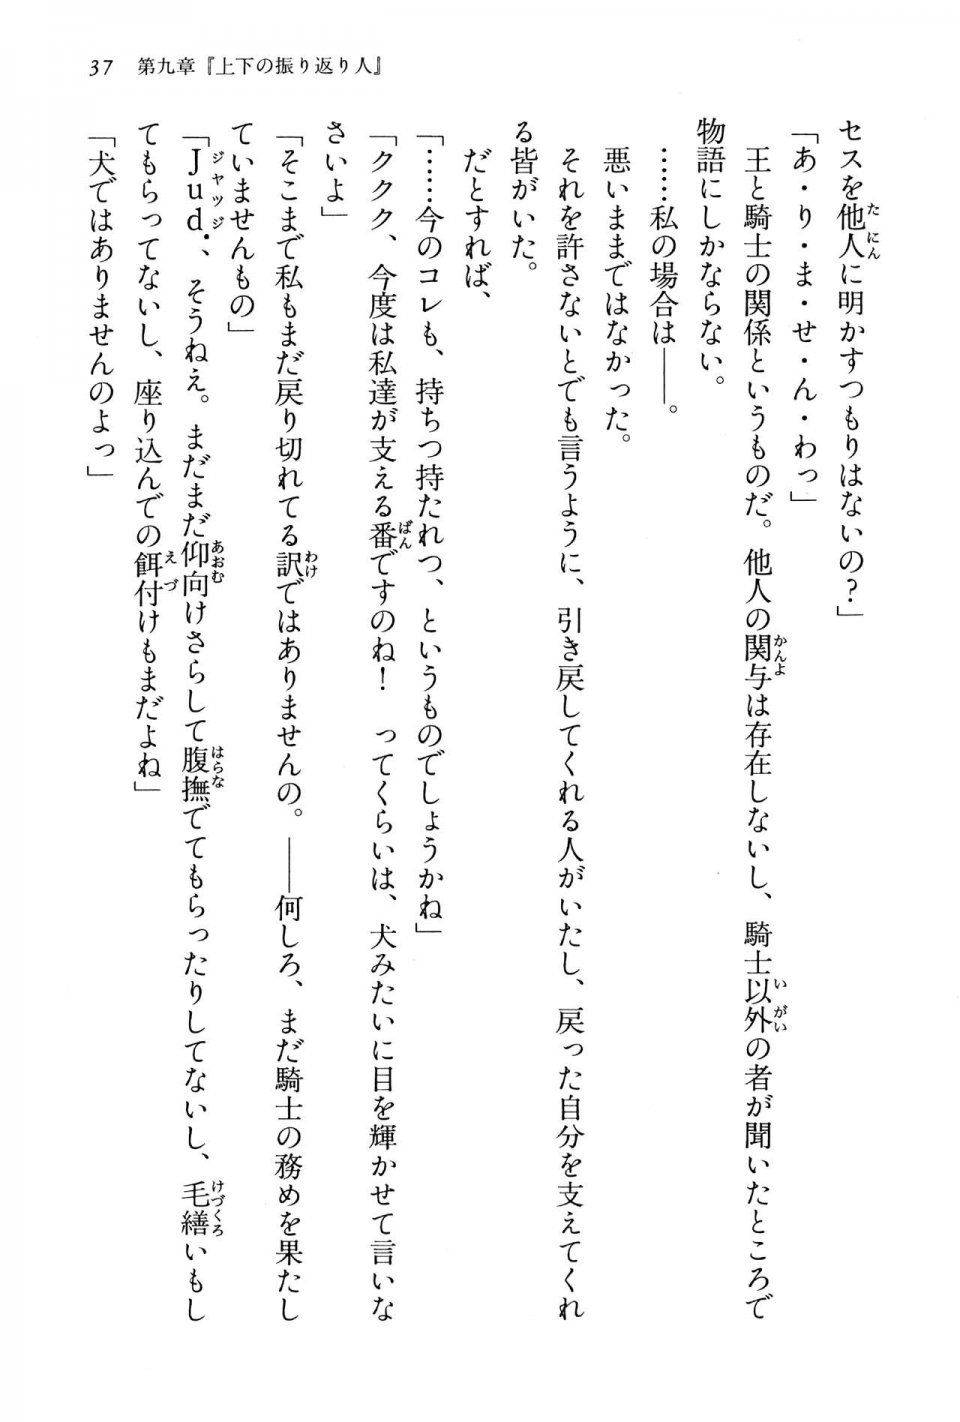 Kyoukai Senjou no Horizon BD Special Mininovel Vol 3(2A) - Photo #41